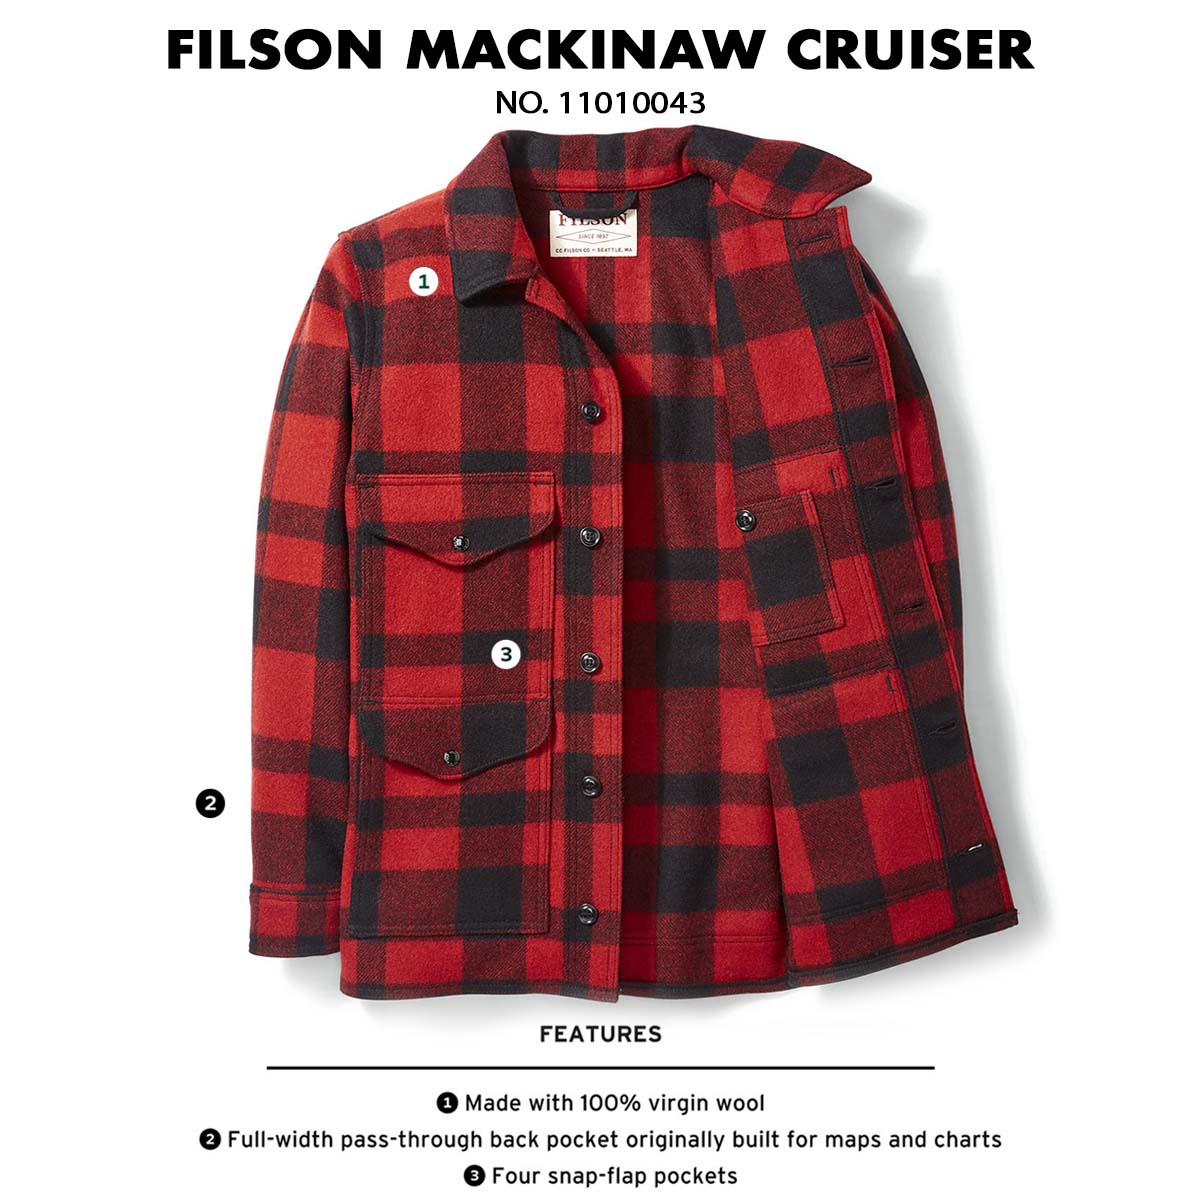 Filson Mackinaw Wool Cruiser Red Black 11010043, features